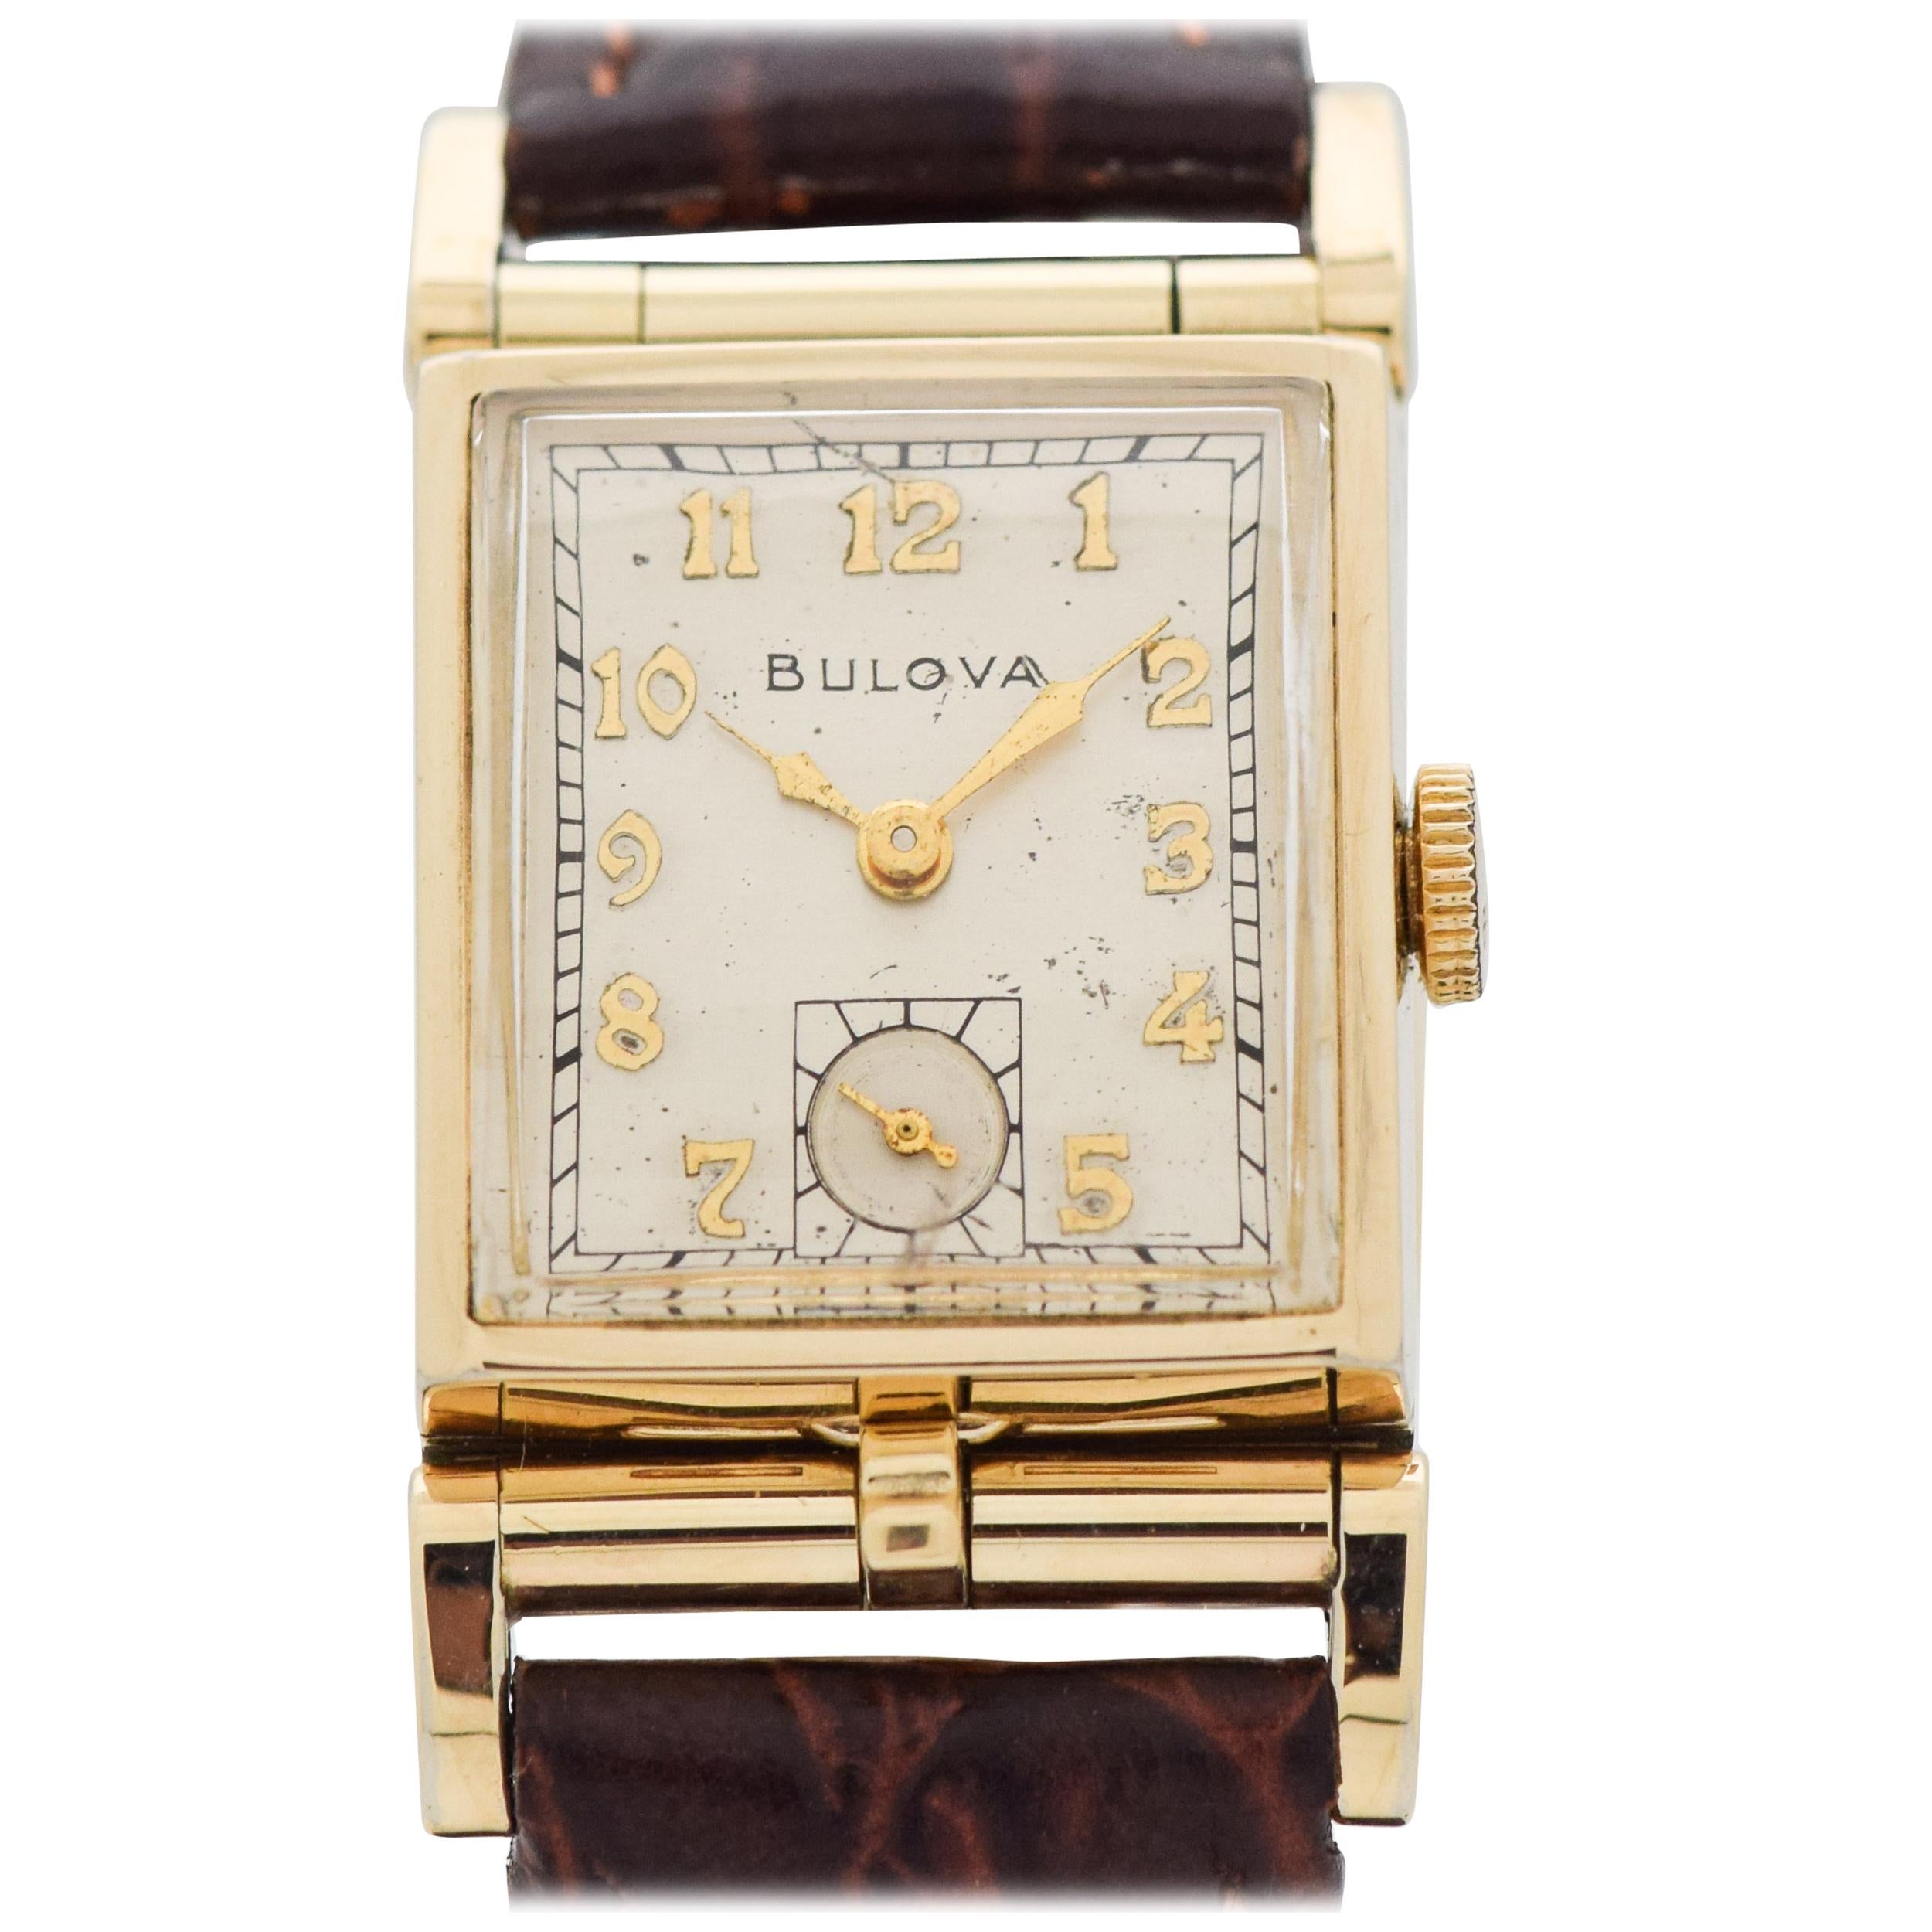 Vintage Bulova Rectangular-Shaped Watch, 1950